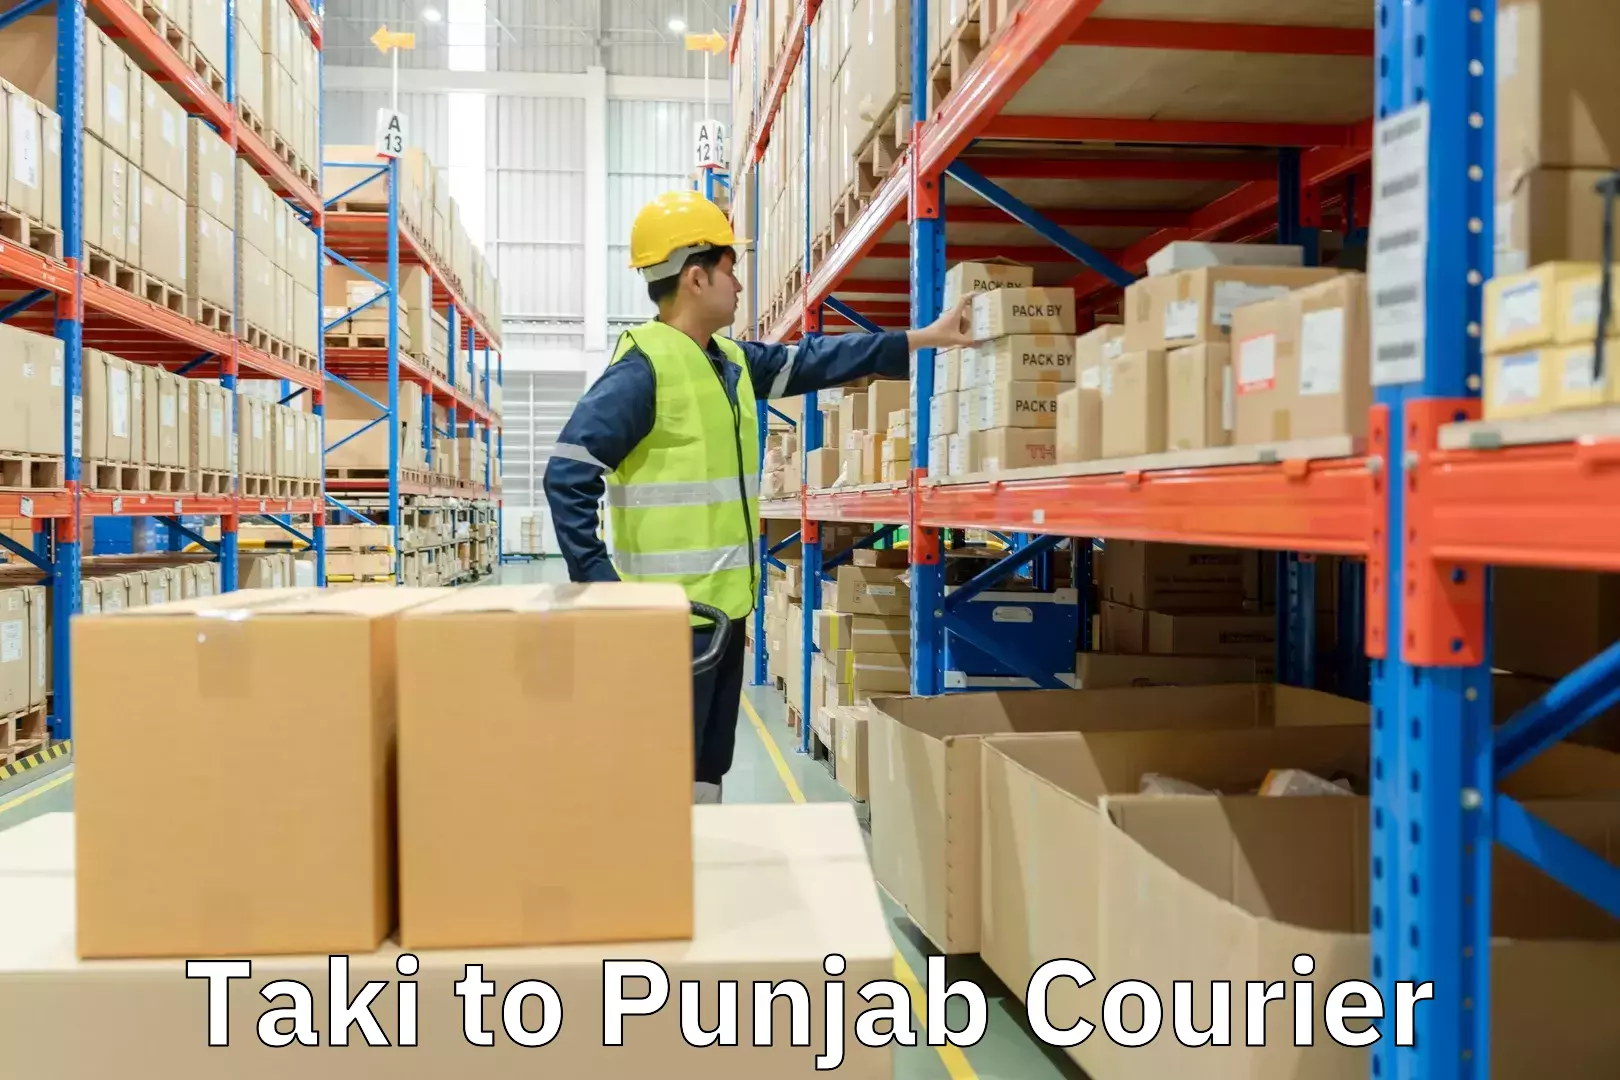 Express logistics service Taki to Punjab